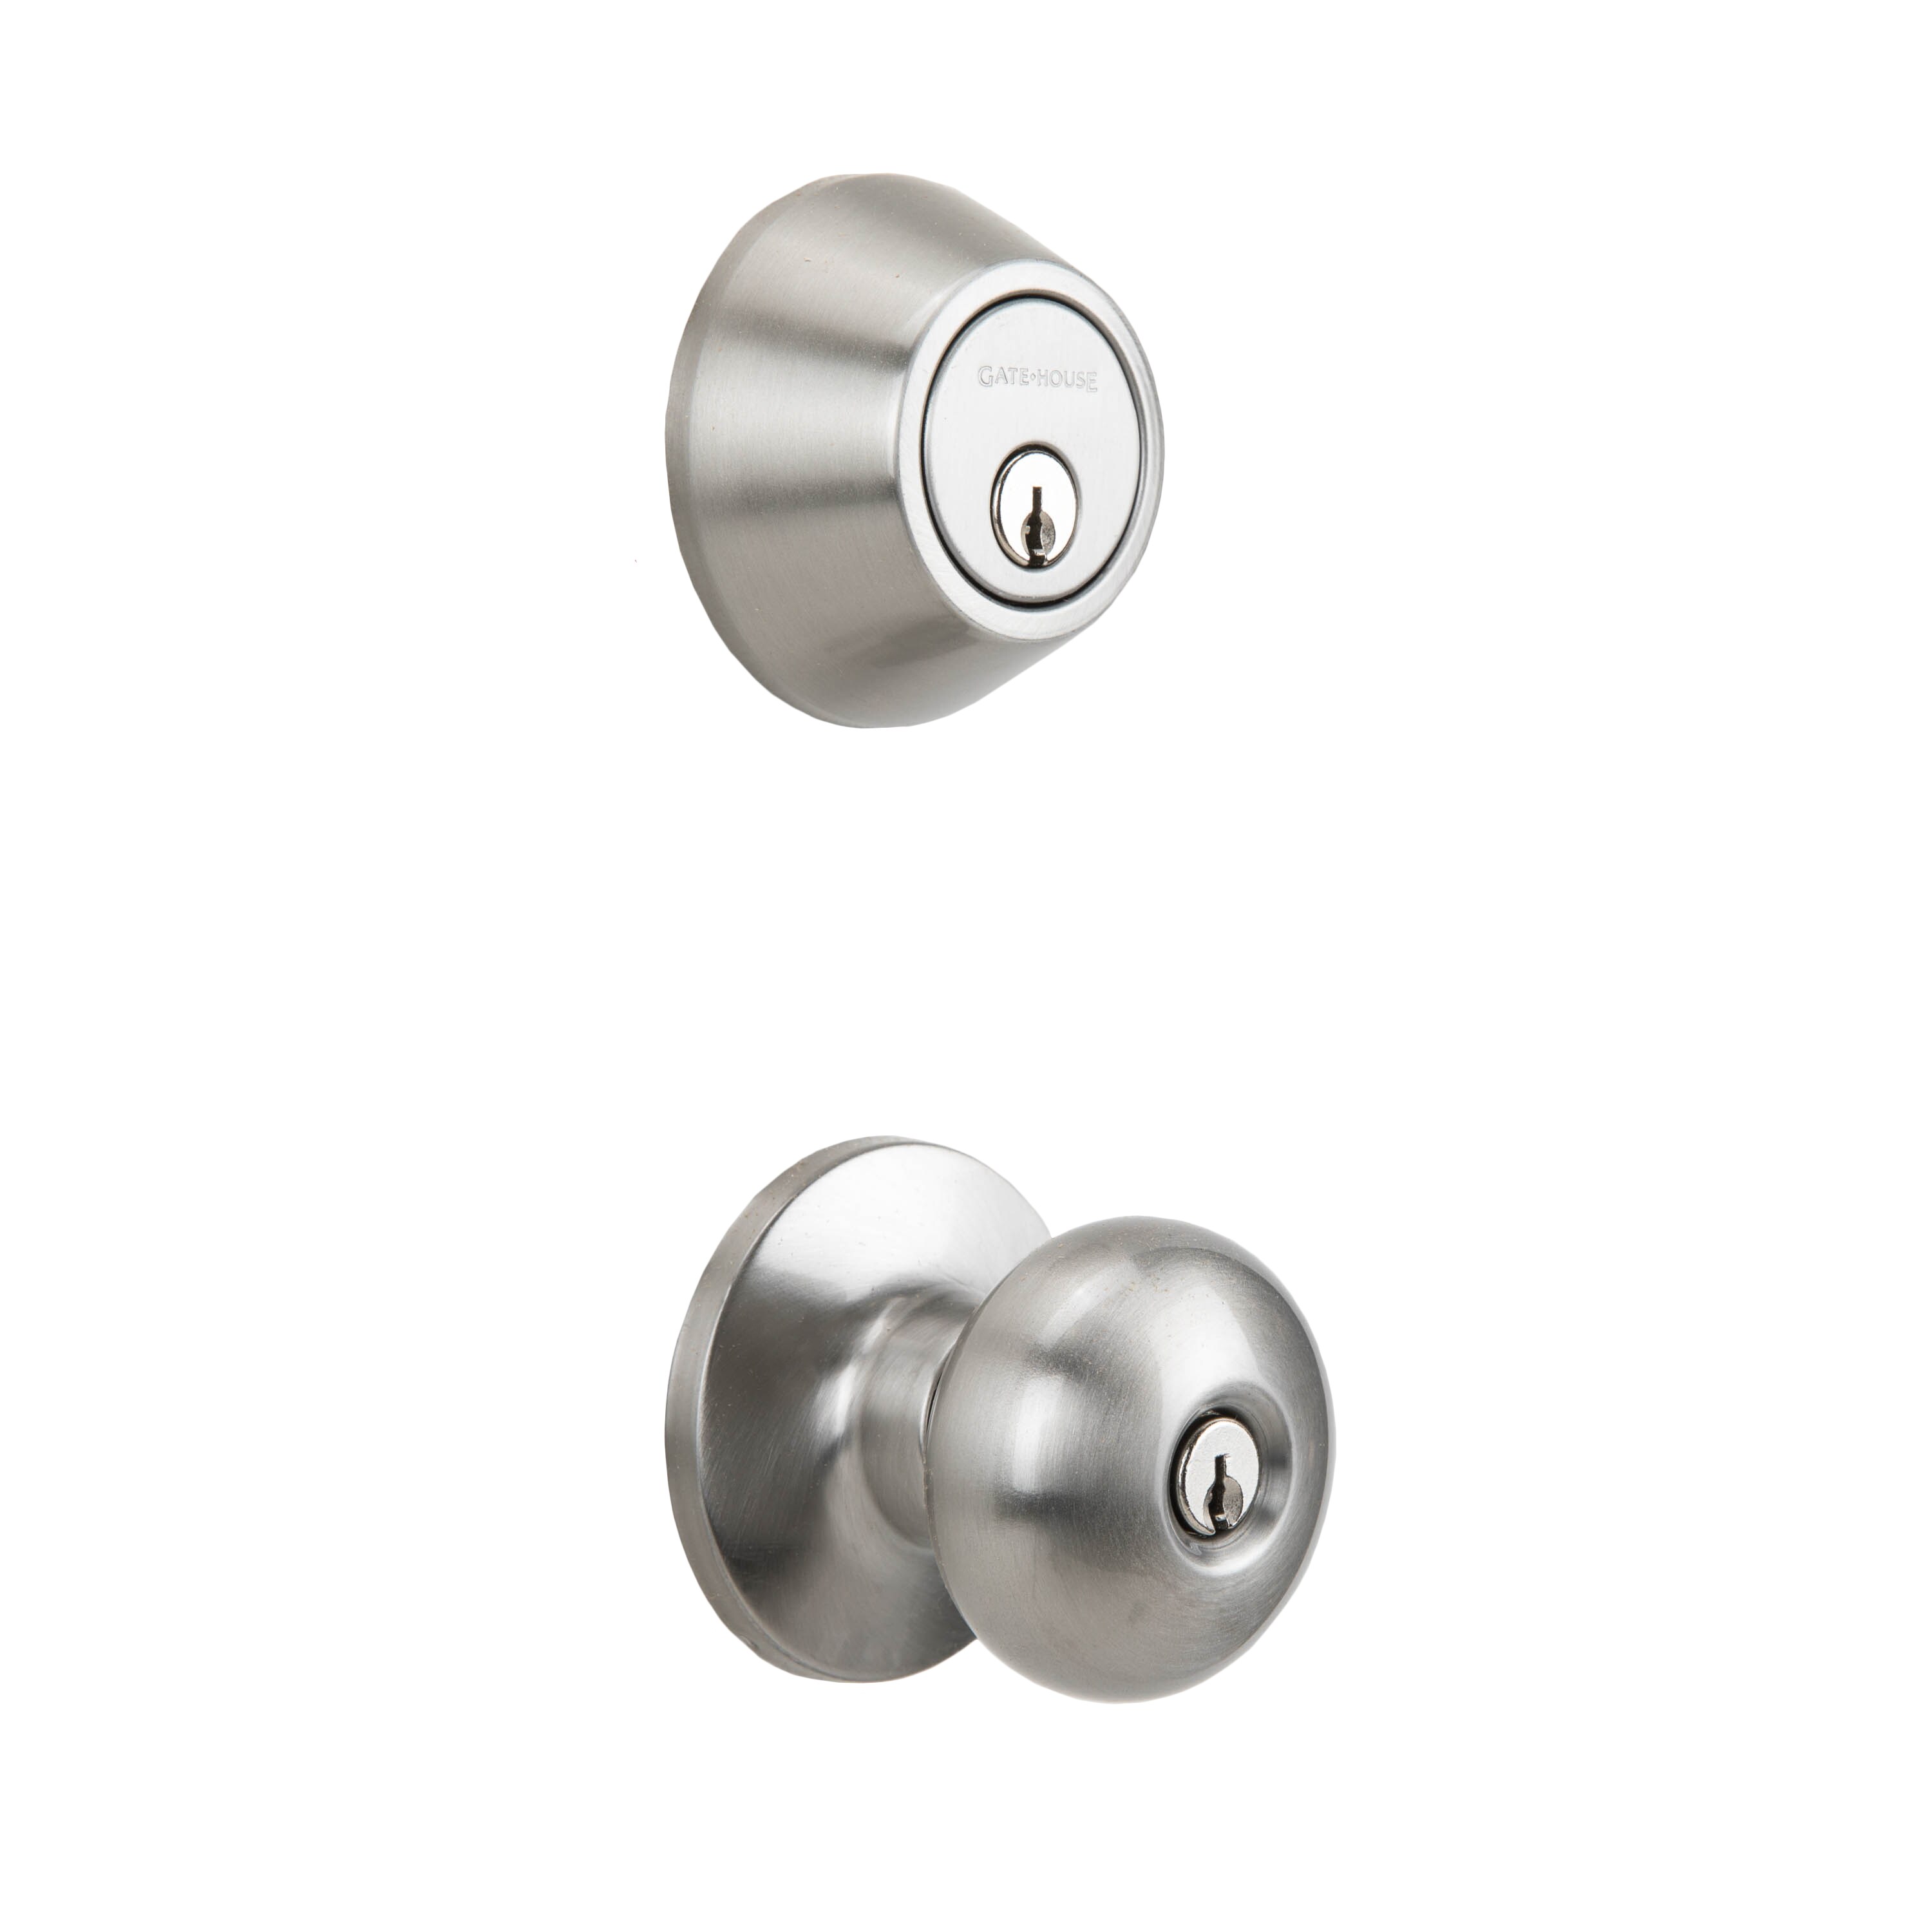 Ebony button shape door knobs